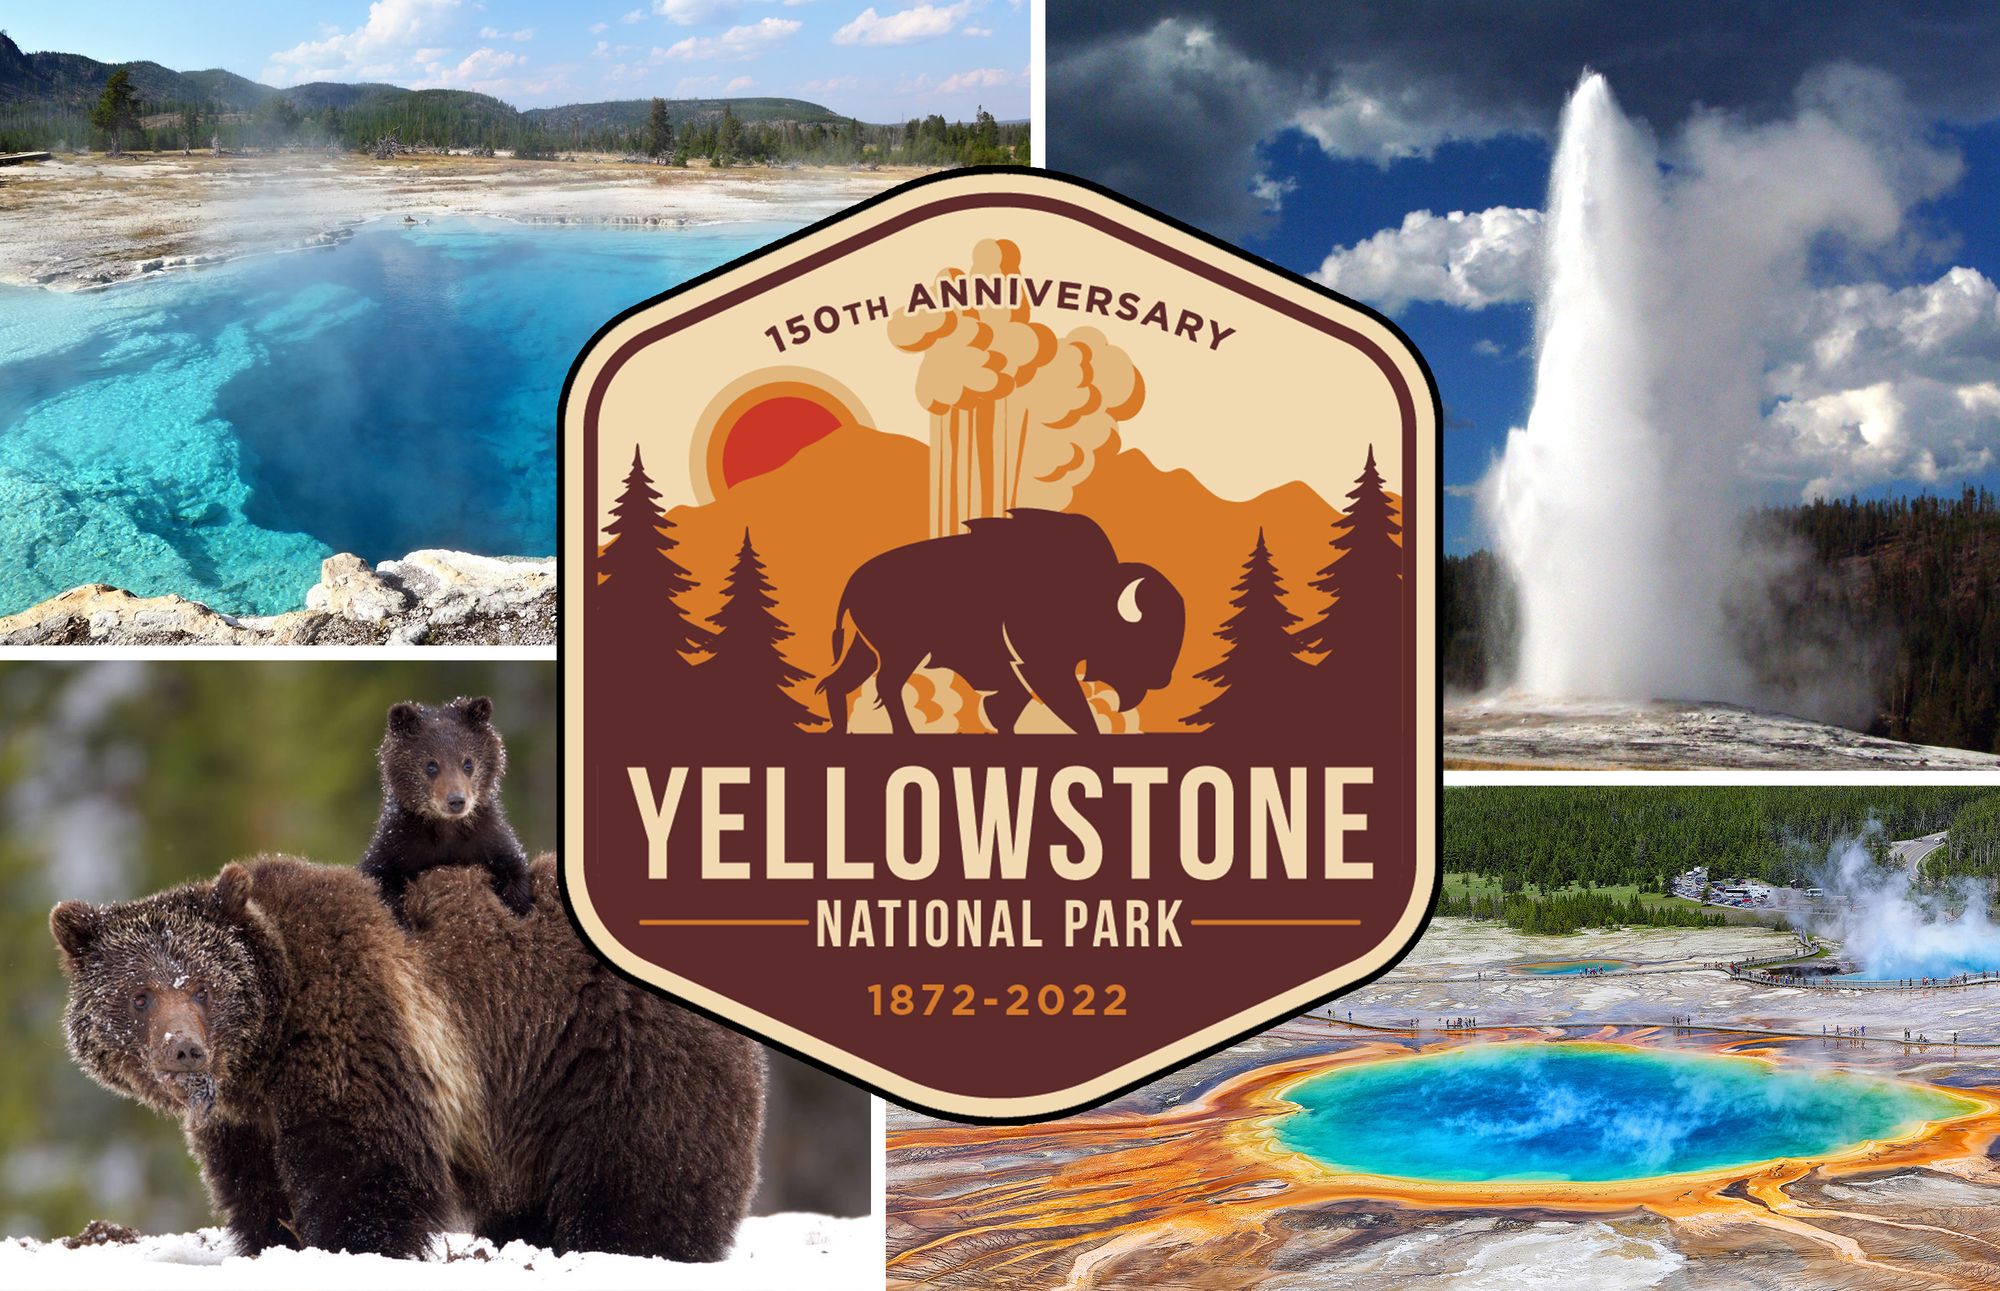 Yellowstone National Park Celebrates Its 150th Anniversary!